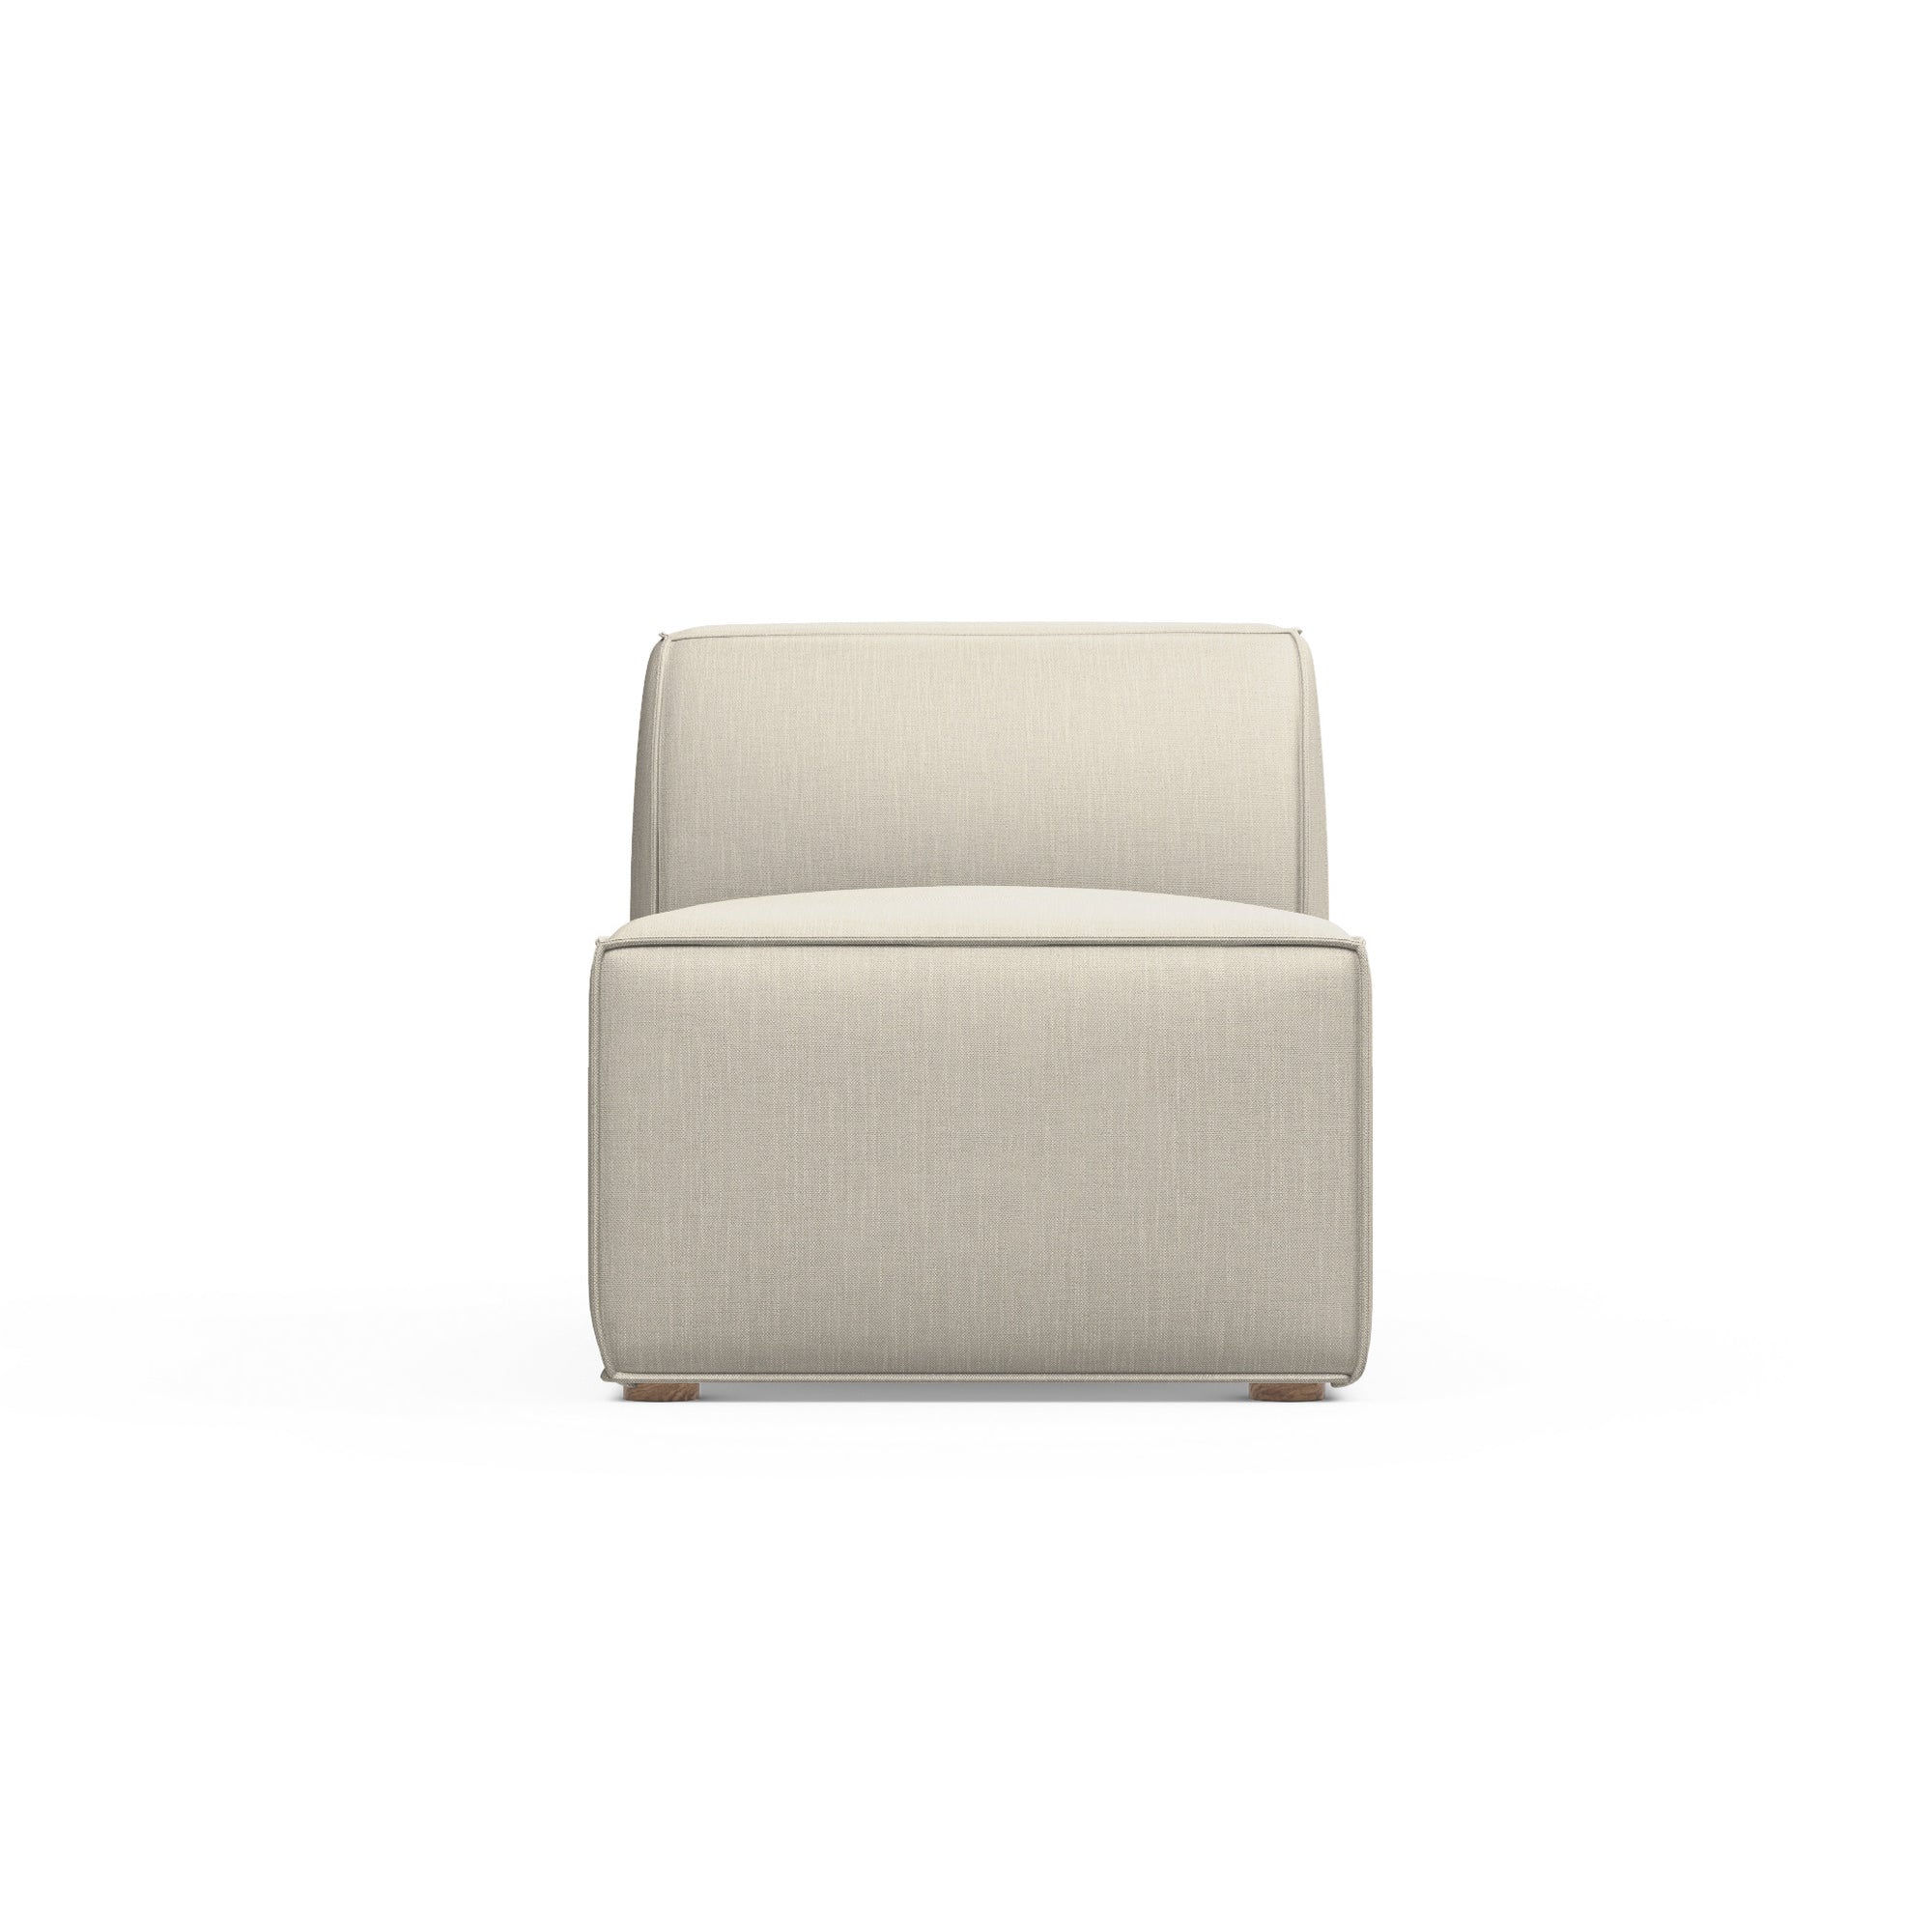 Varick Armless Chair - Oyster Box Weave Linen